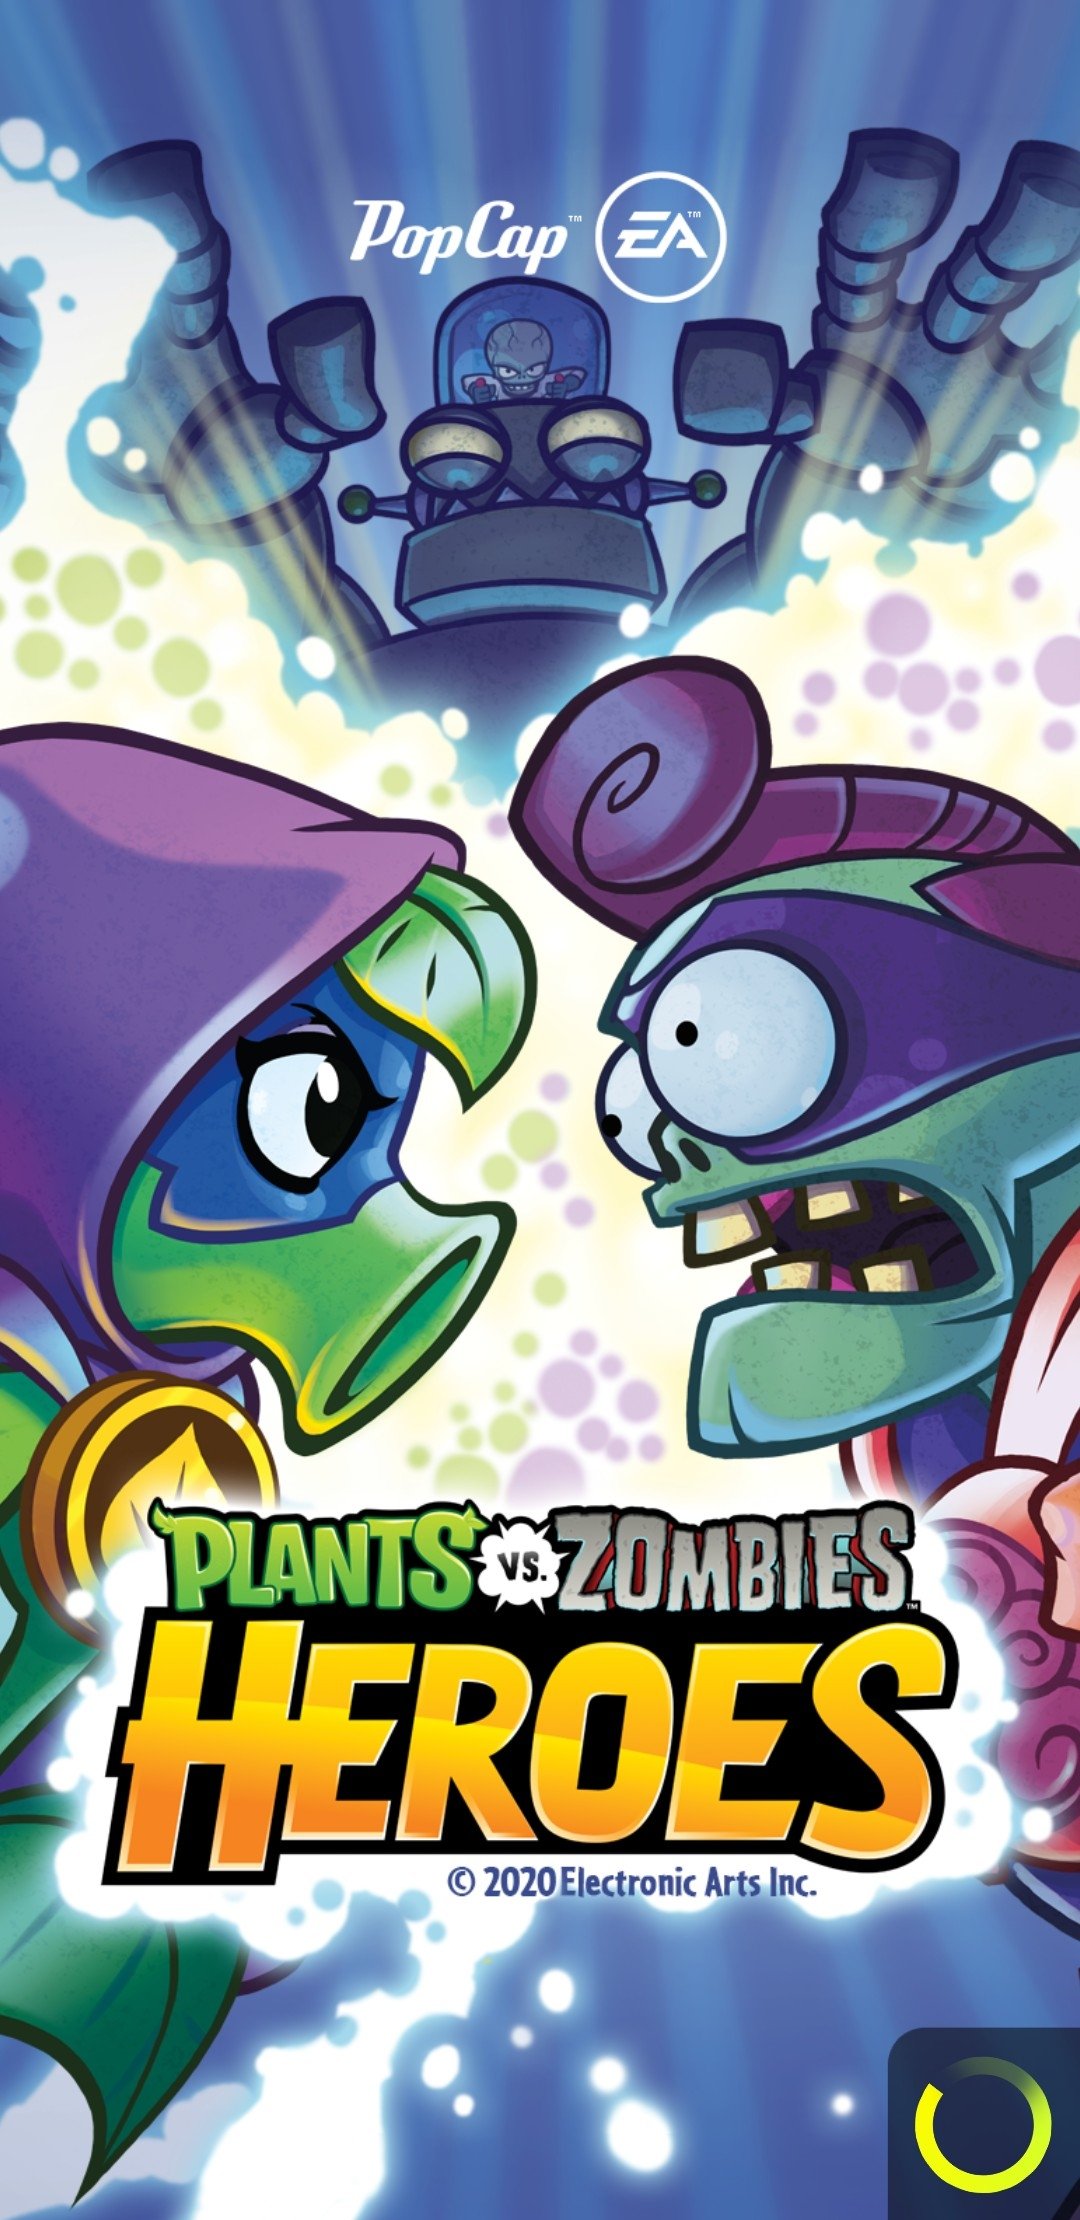 plants vs zombies 2 mac